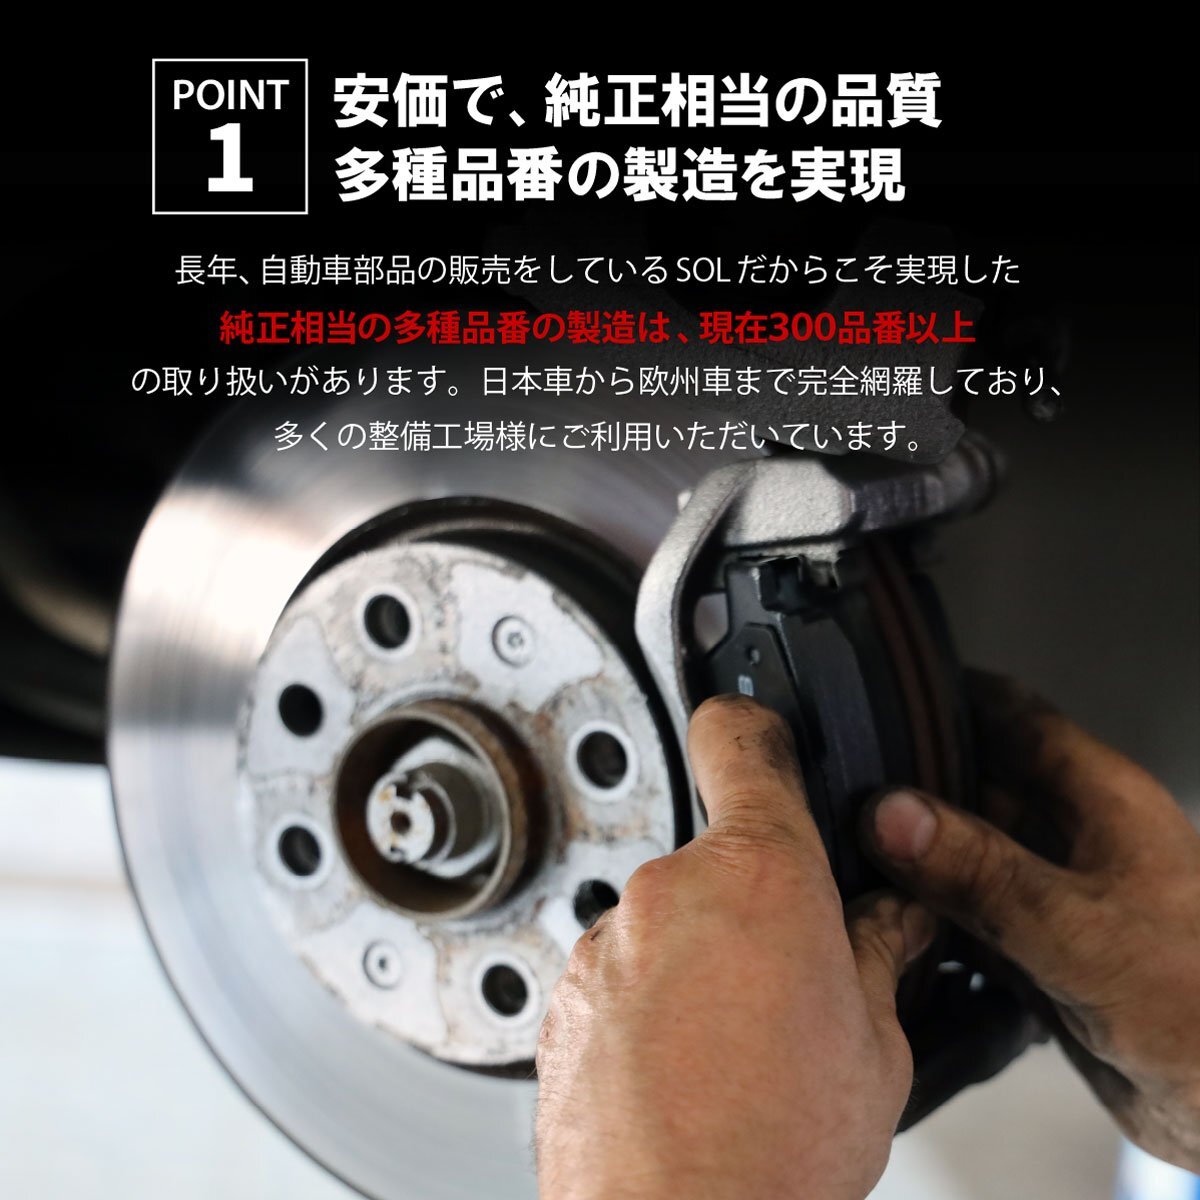  Toyota TOYOTA Alphard ANH20W front brake pad left right set shipping deadline 18 hour car make special design 04465-48150 04465-0E020